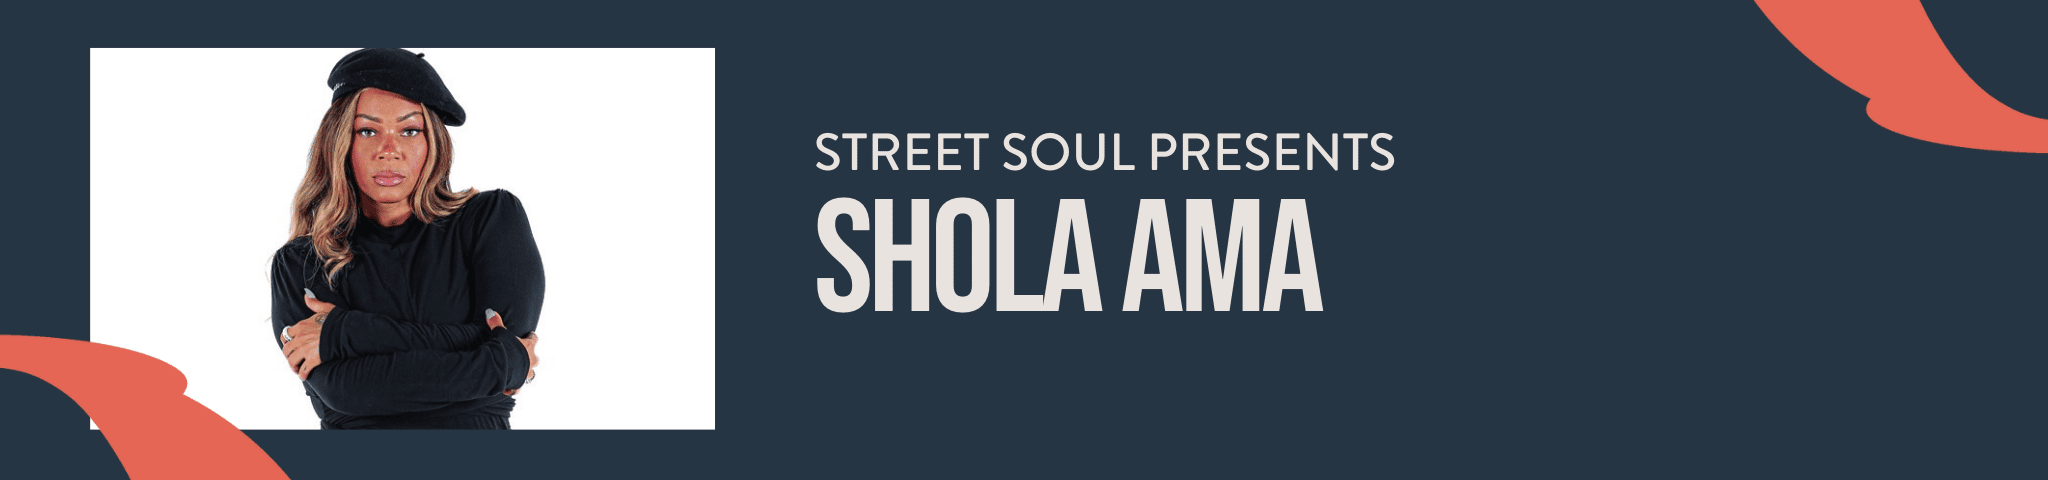 STREET SOUL PRESENTS SHOLA AMA